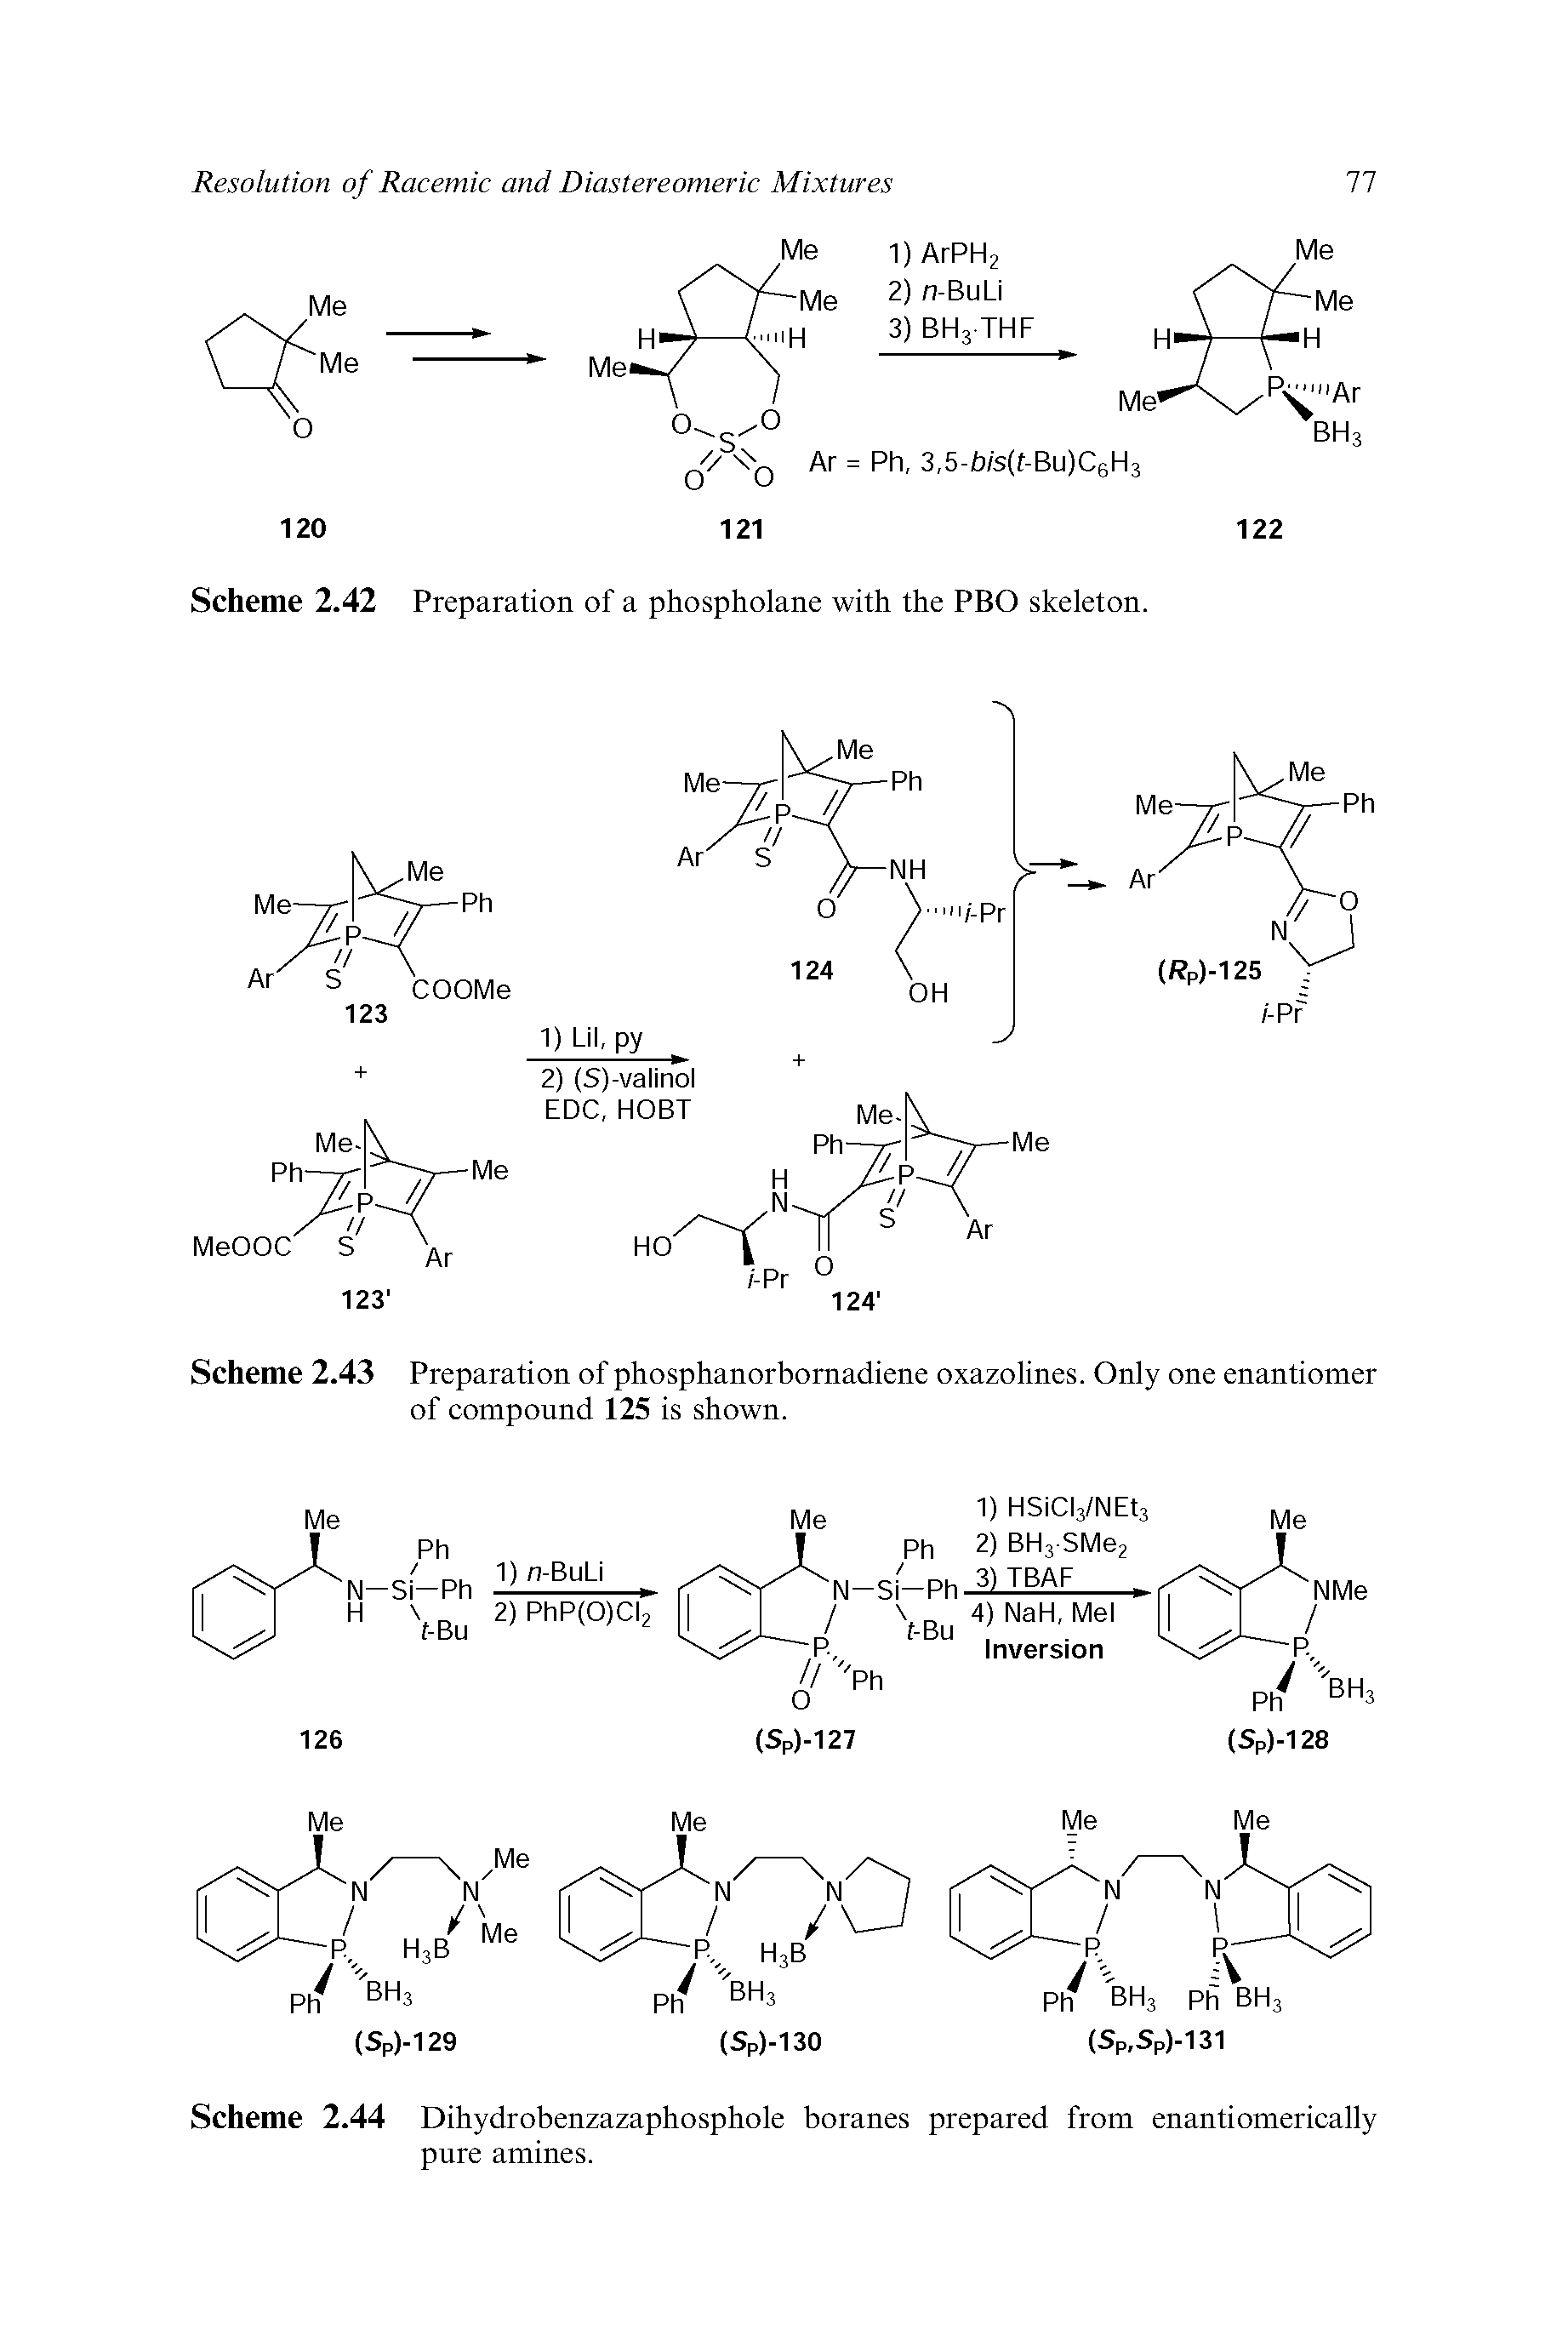 Scheme 2.44 Dihydrobenzazaphosphole boranes prepared from enantiomerically pure amines.